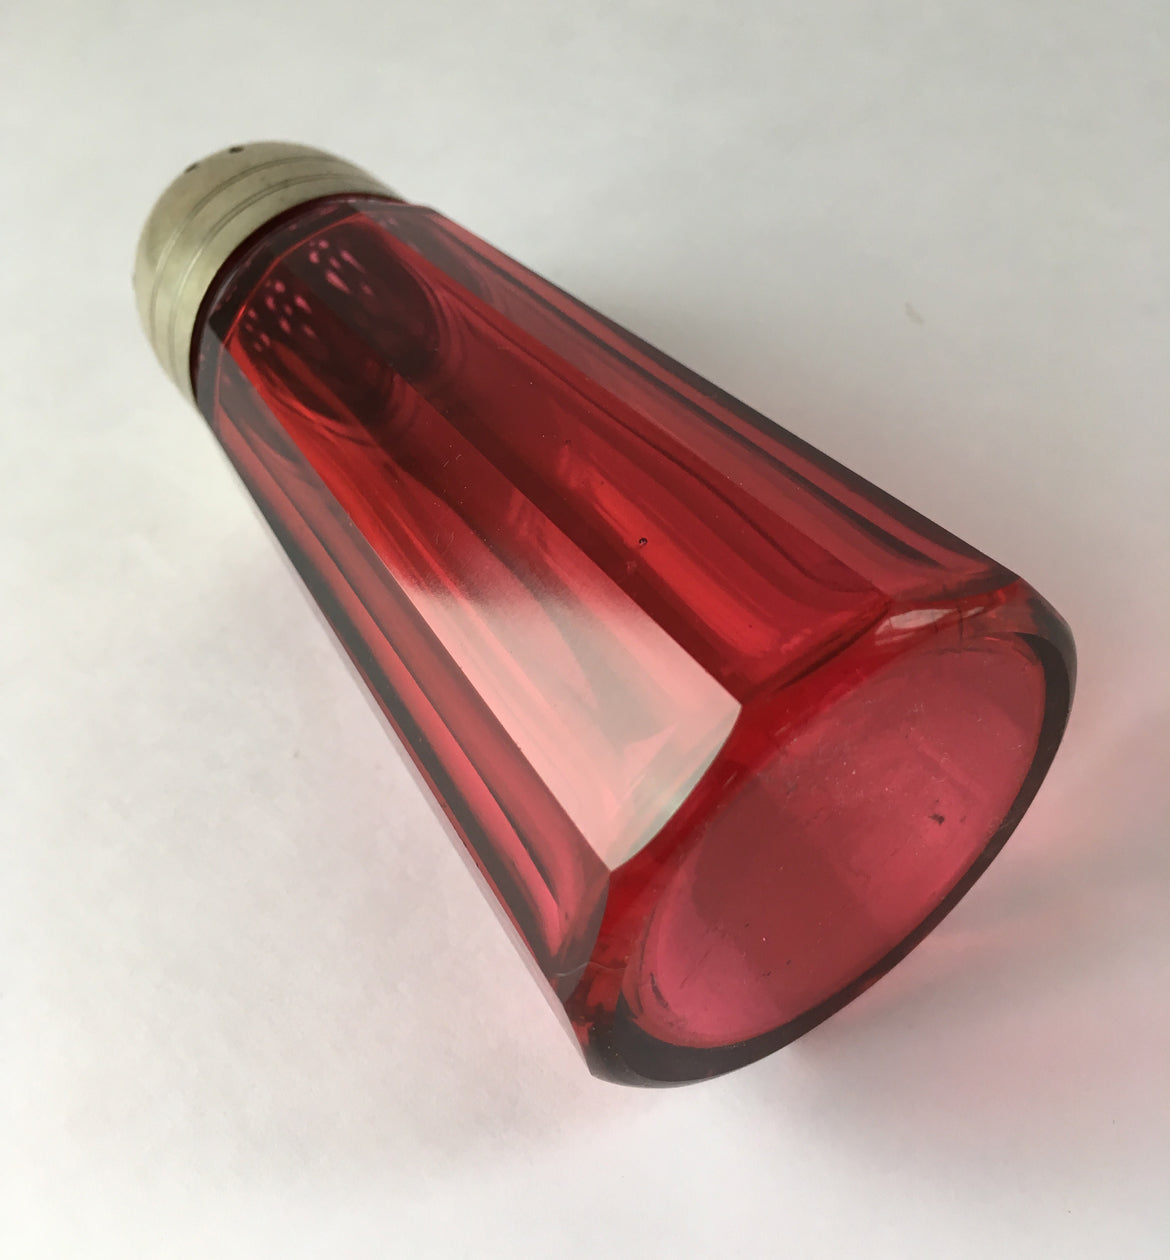 Antique Cranberry Glass Sugar Shaker - angle view image